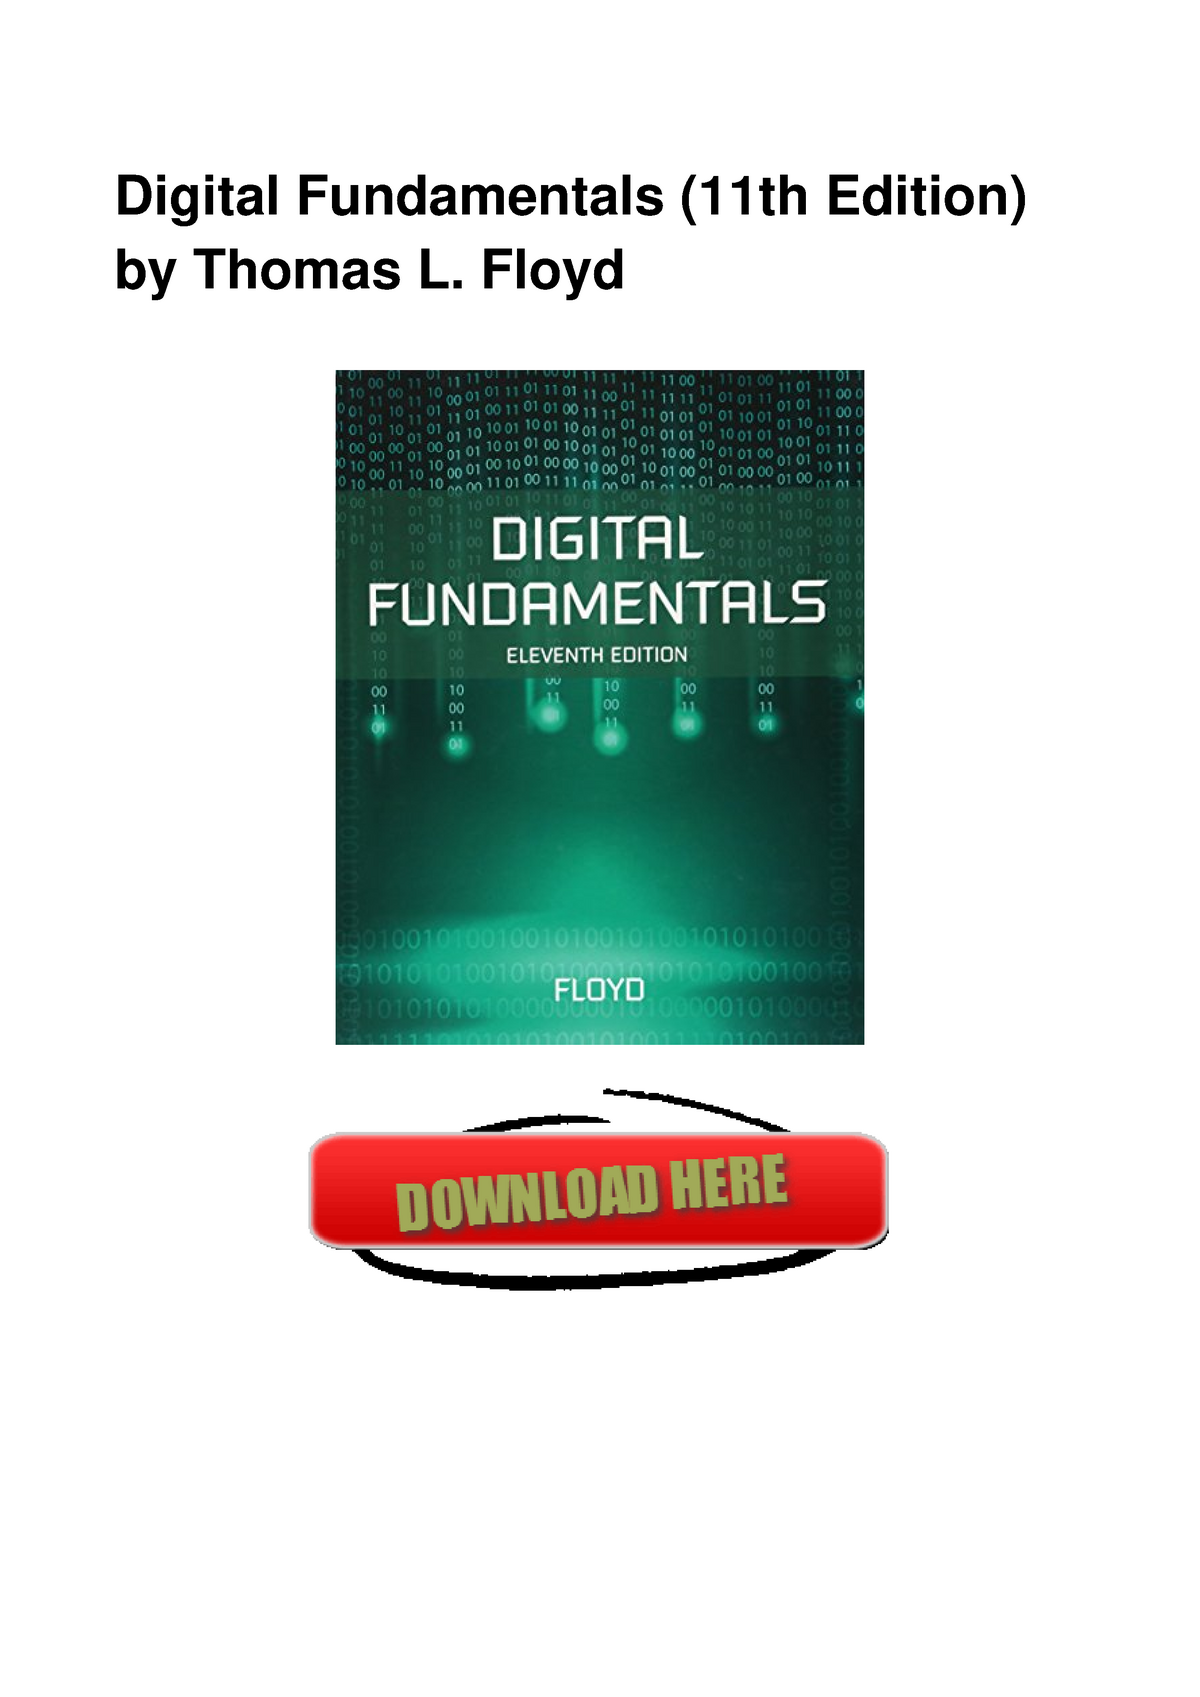 digital fundamentals 11th edition pdf free download